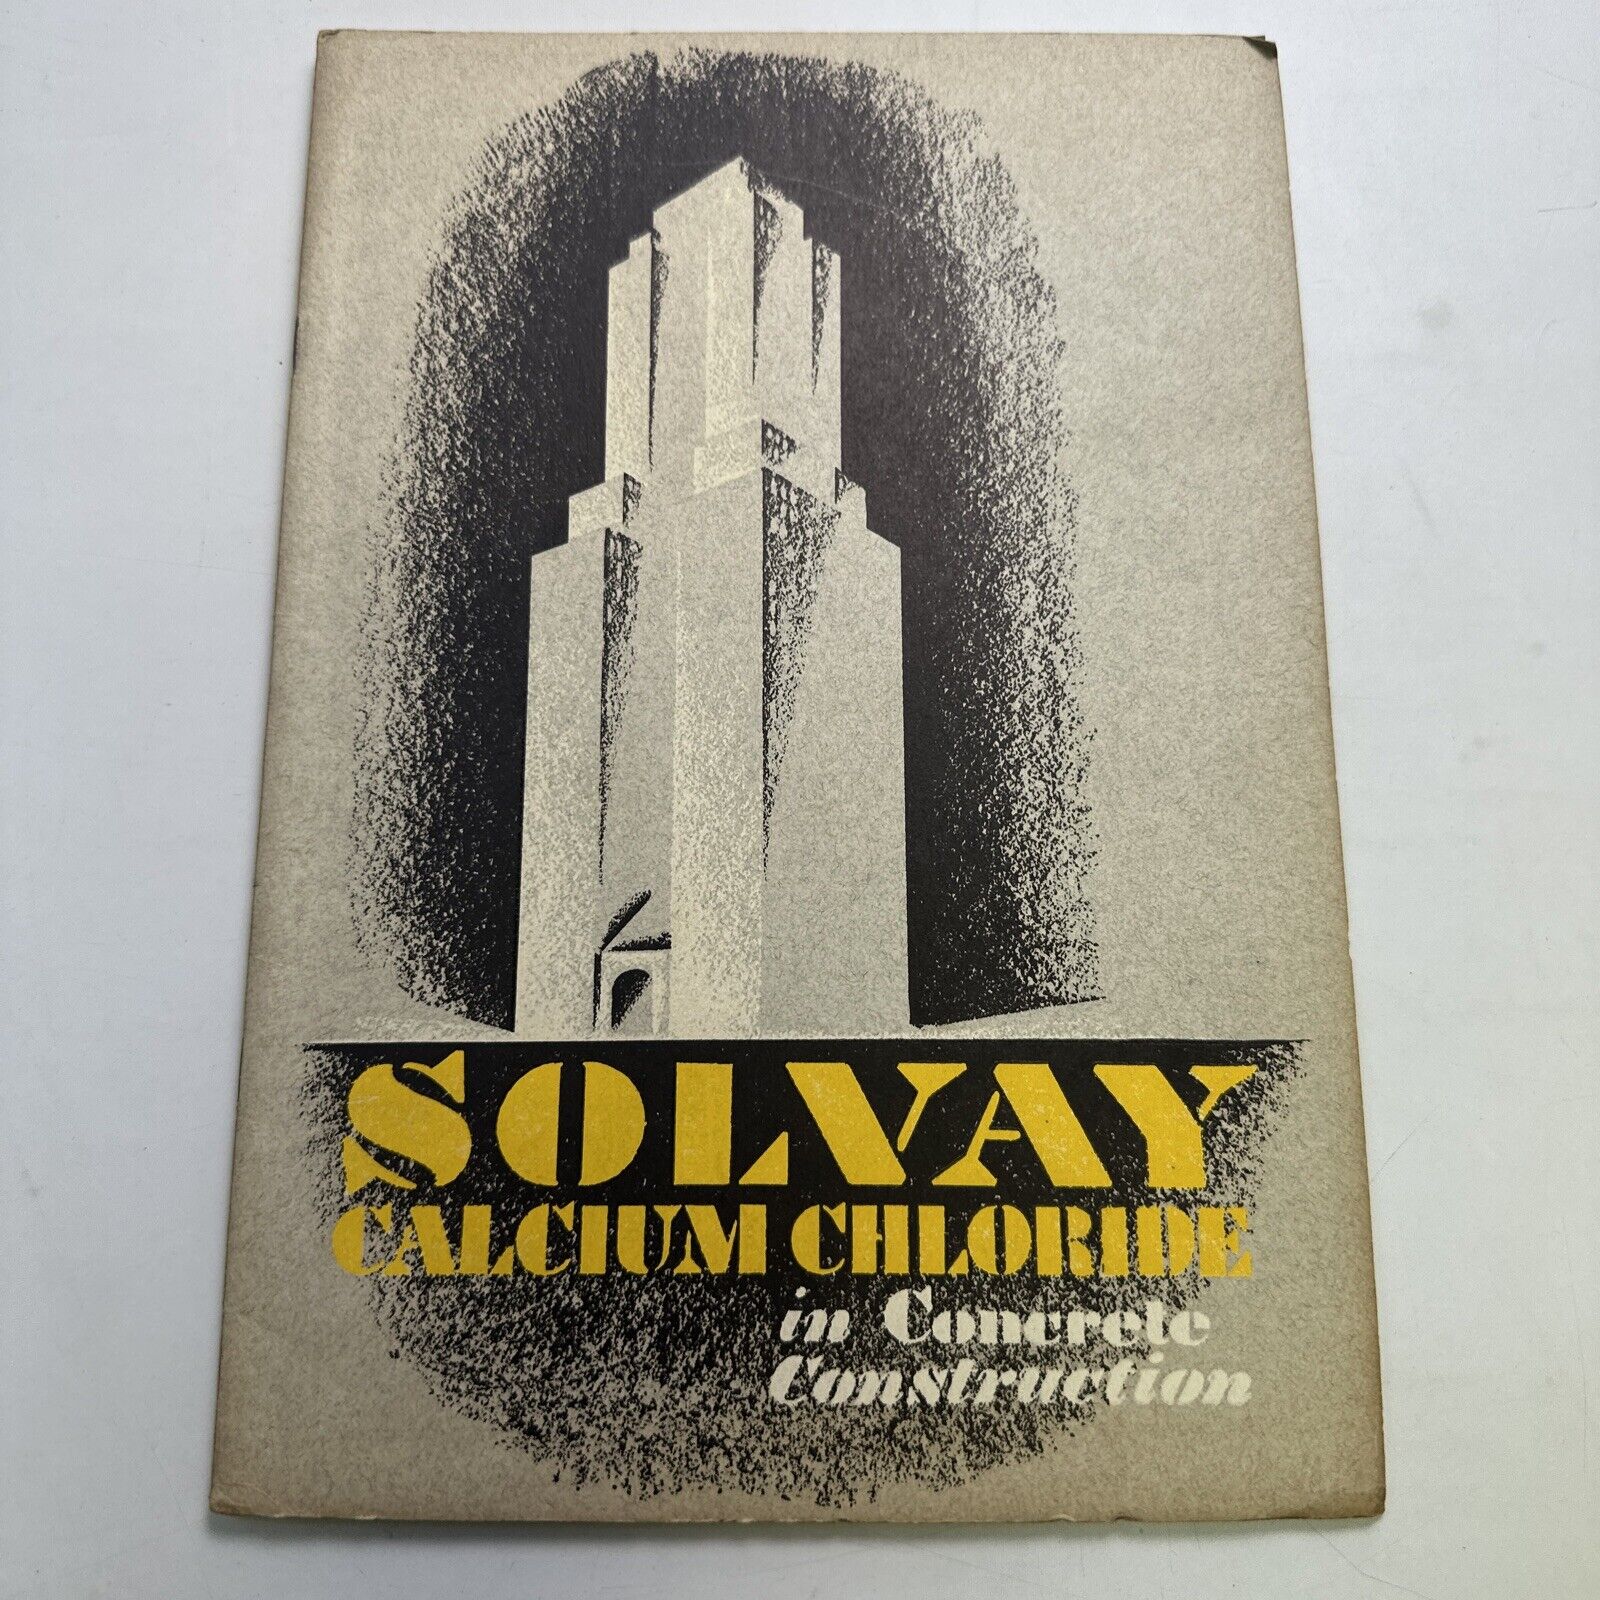 Solely Calcium Chloride in Concrete Construction - 1928  